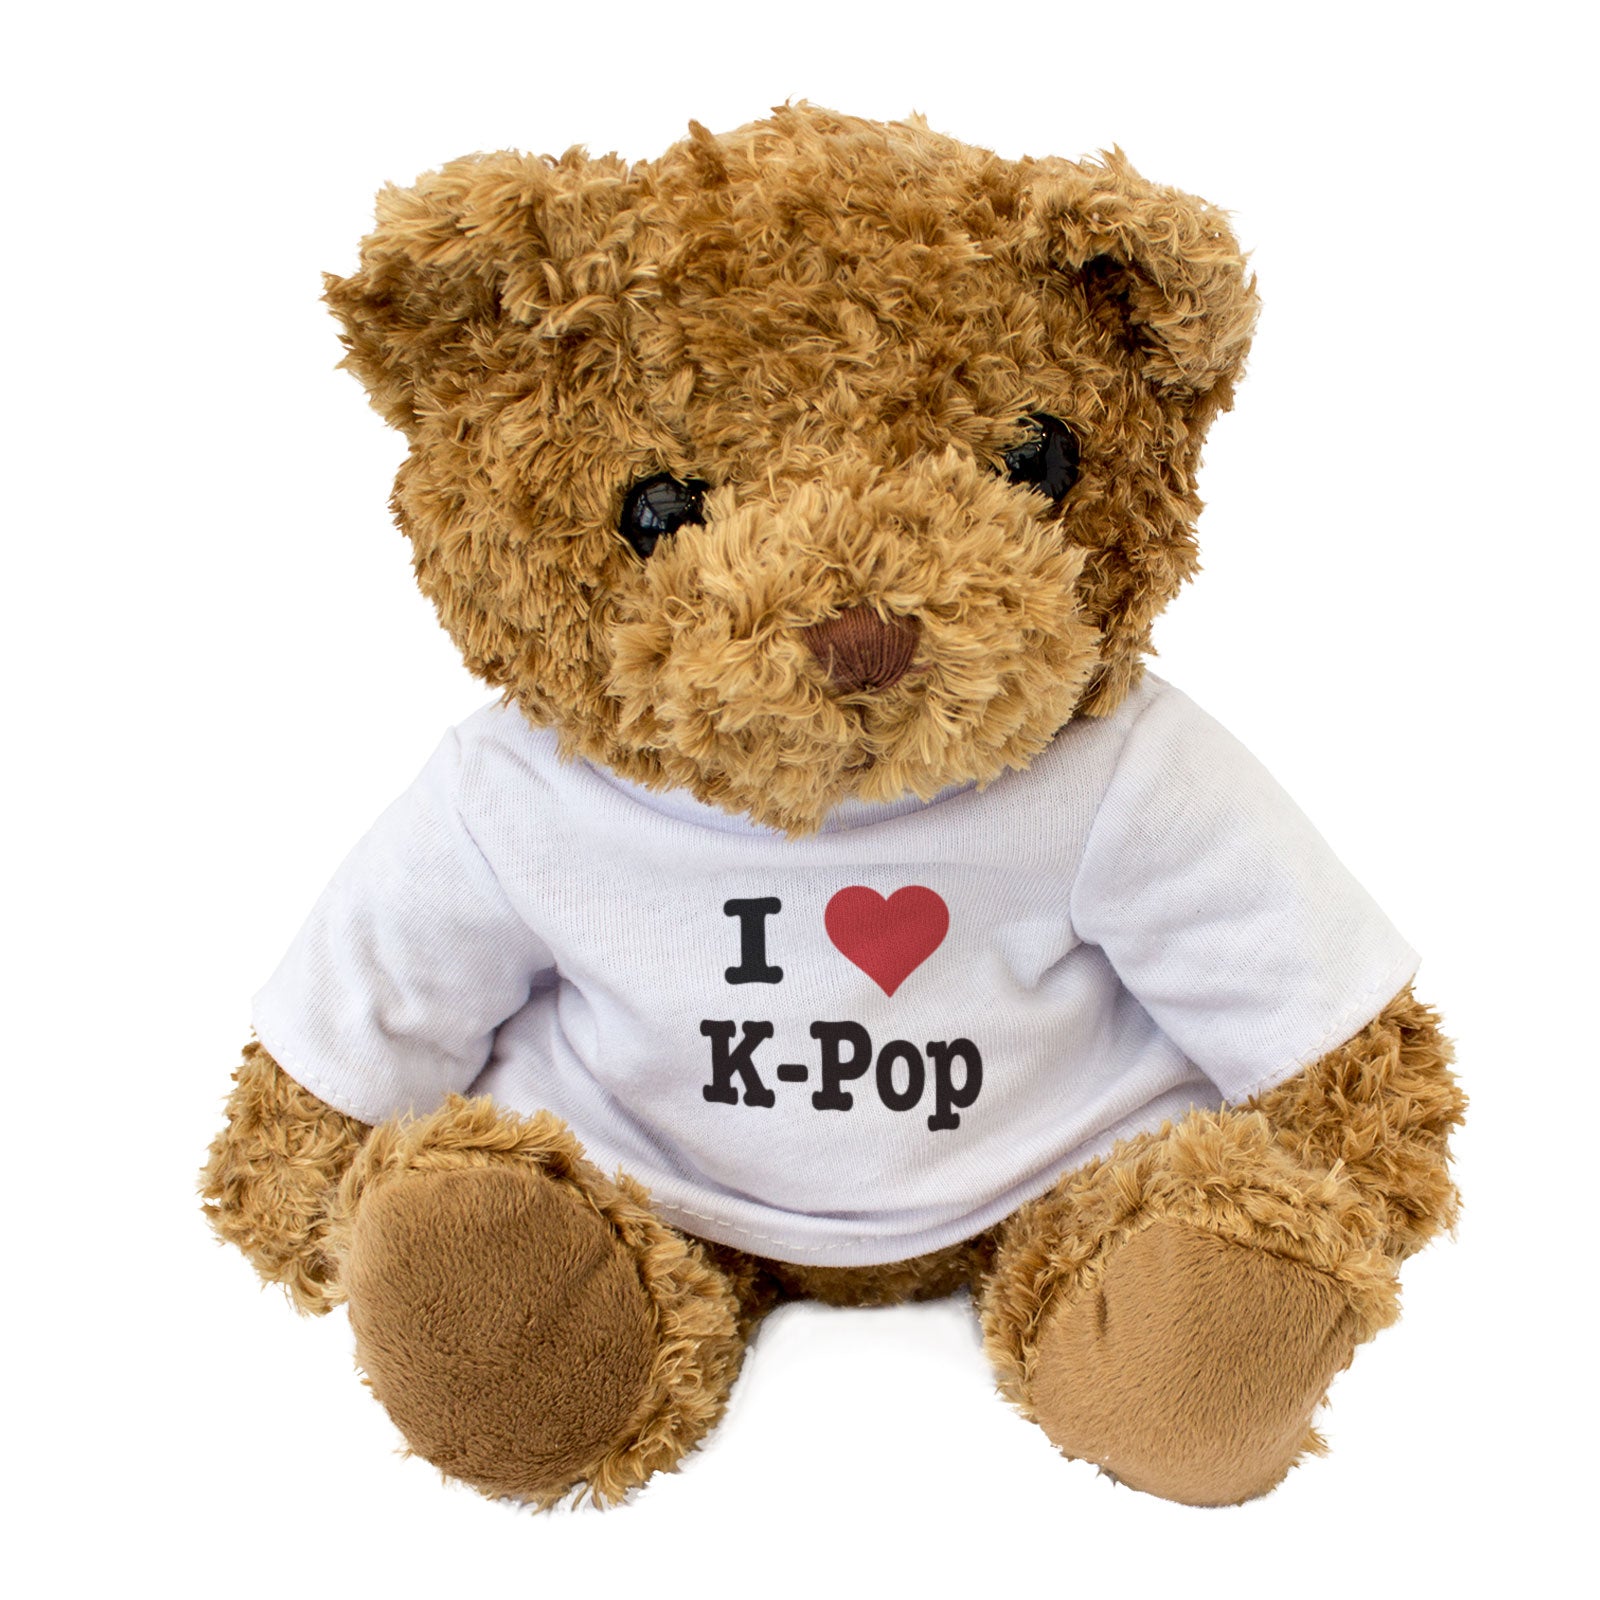 I Love K-Pop - Teddy Bear